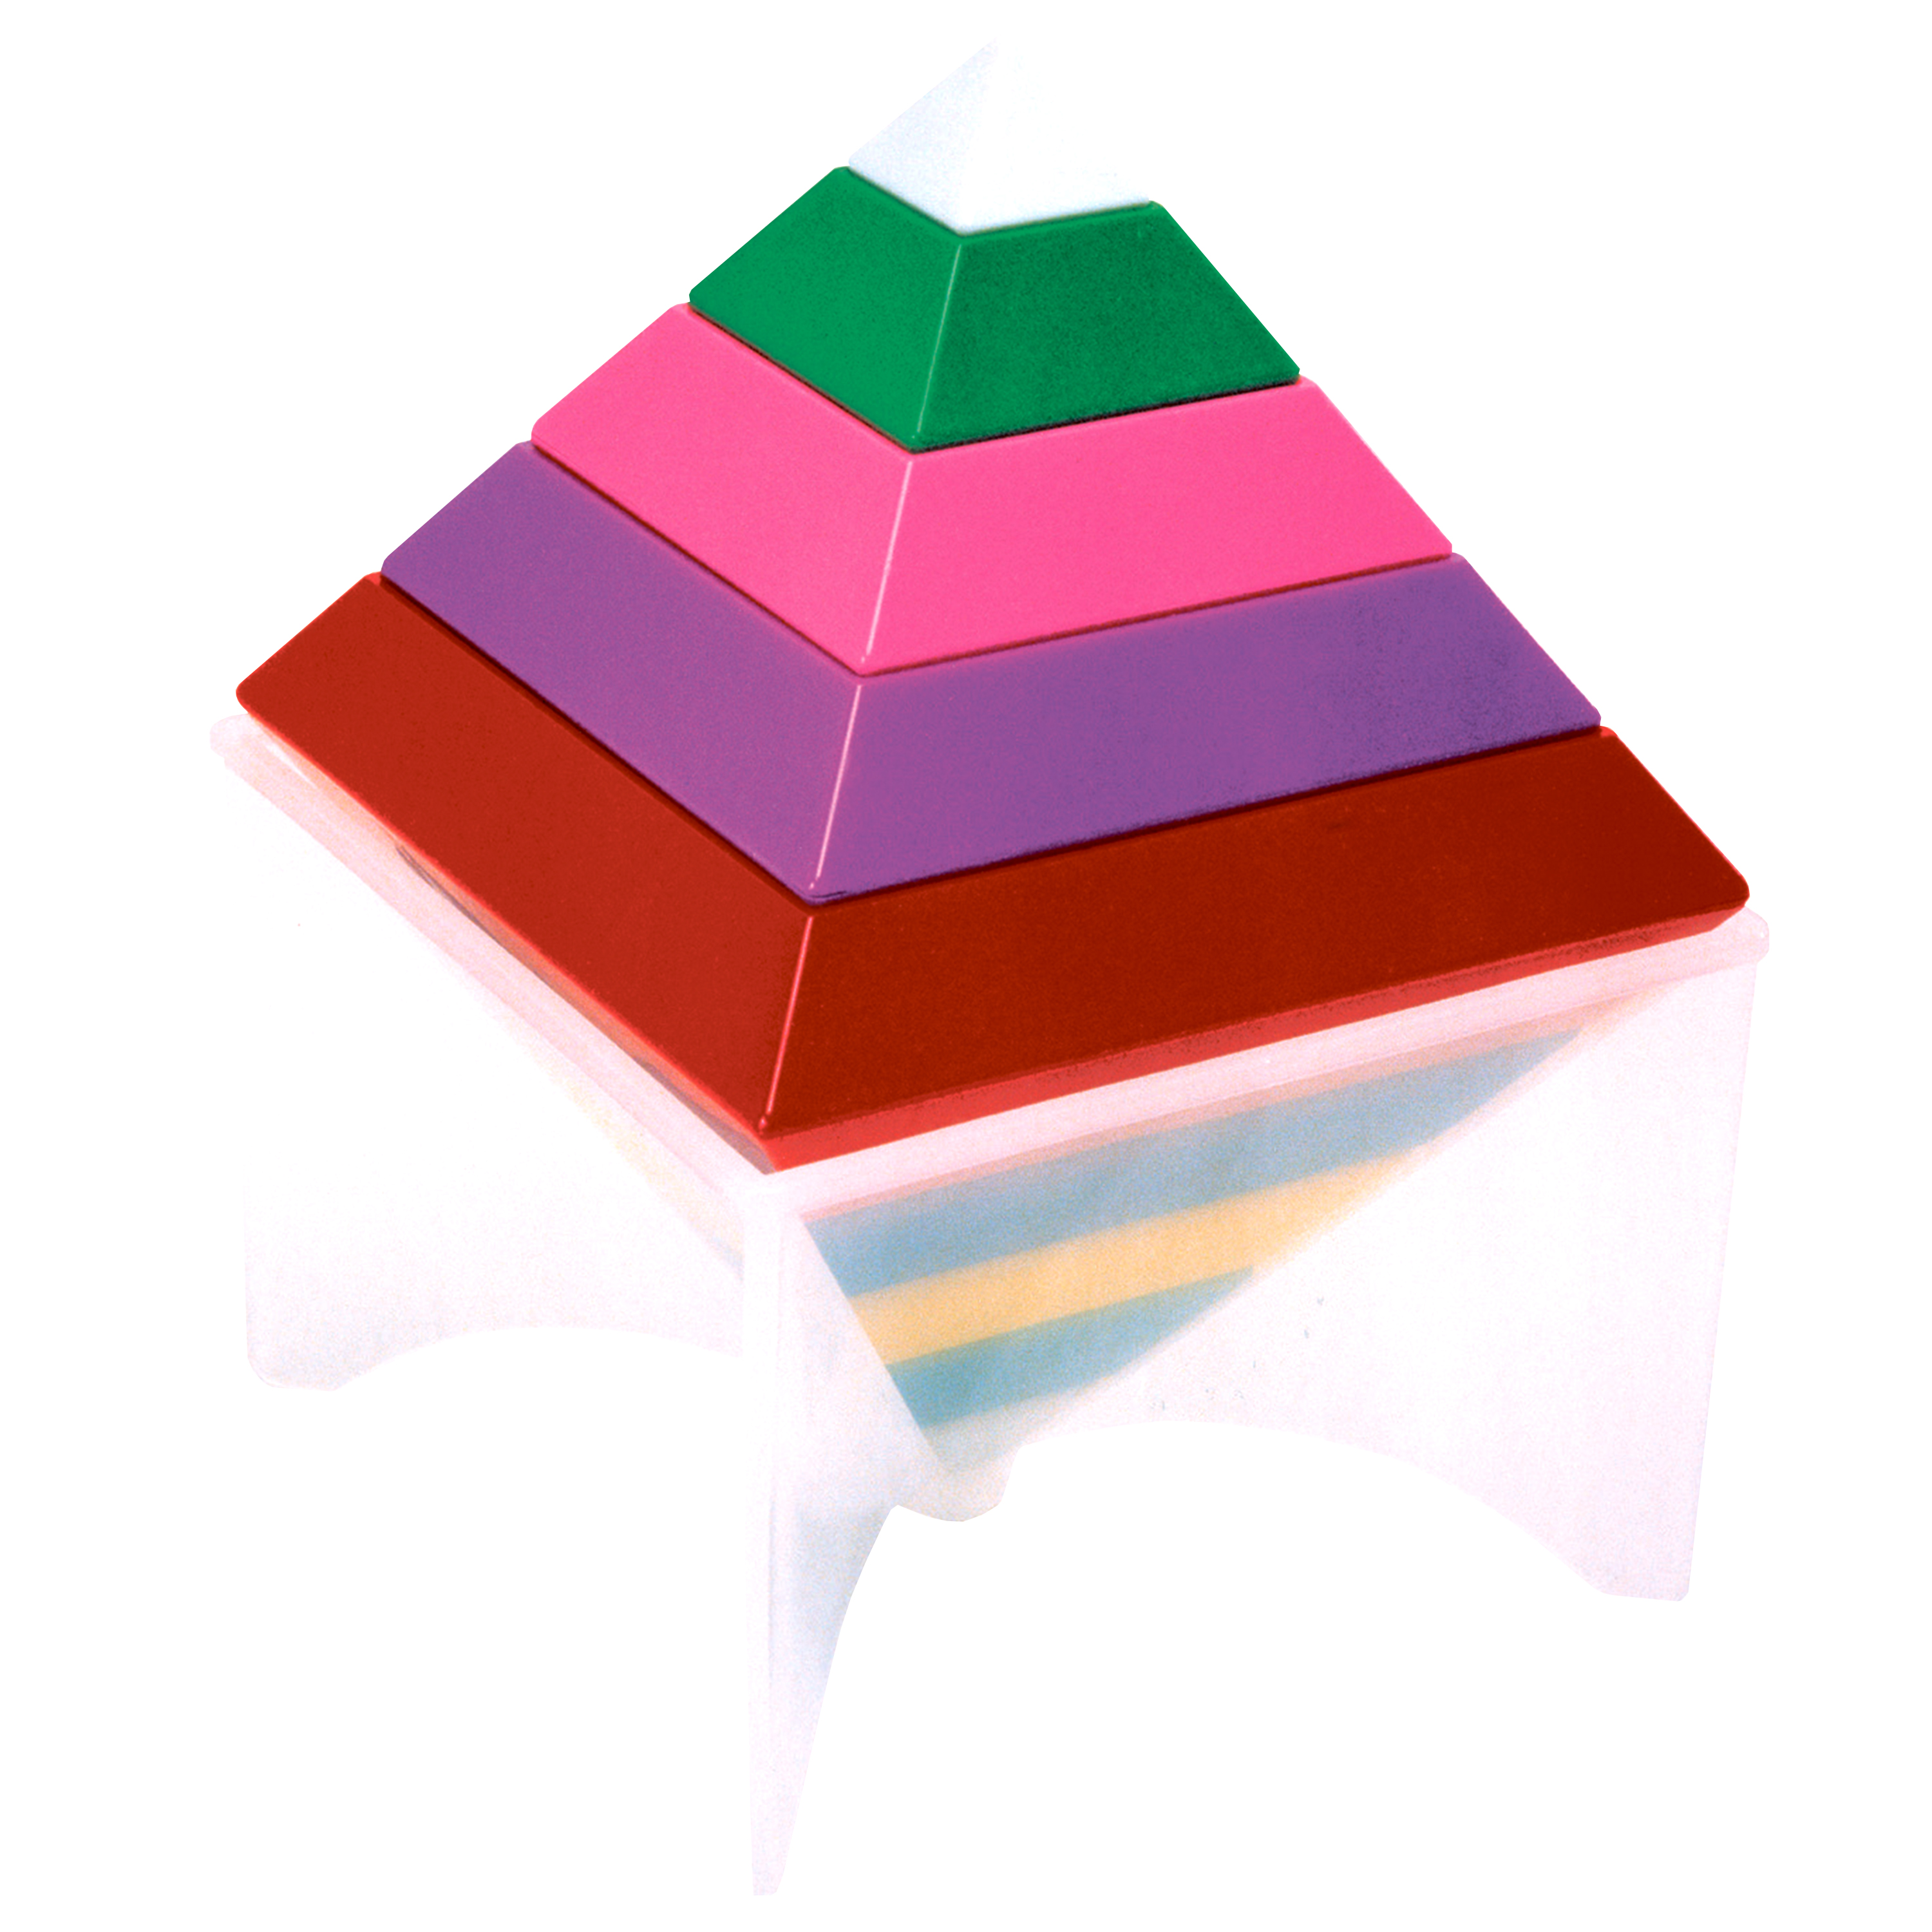 Regenbogen-Pyramide